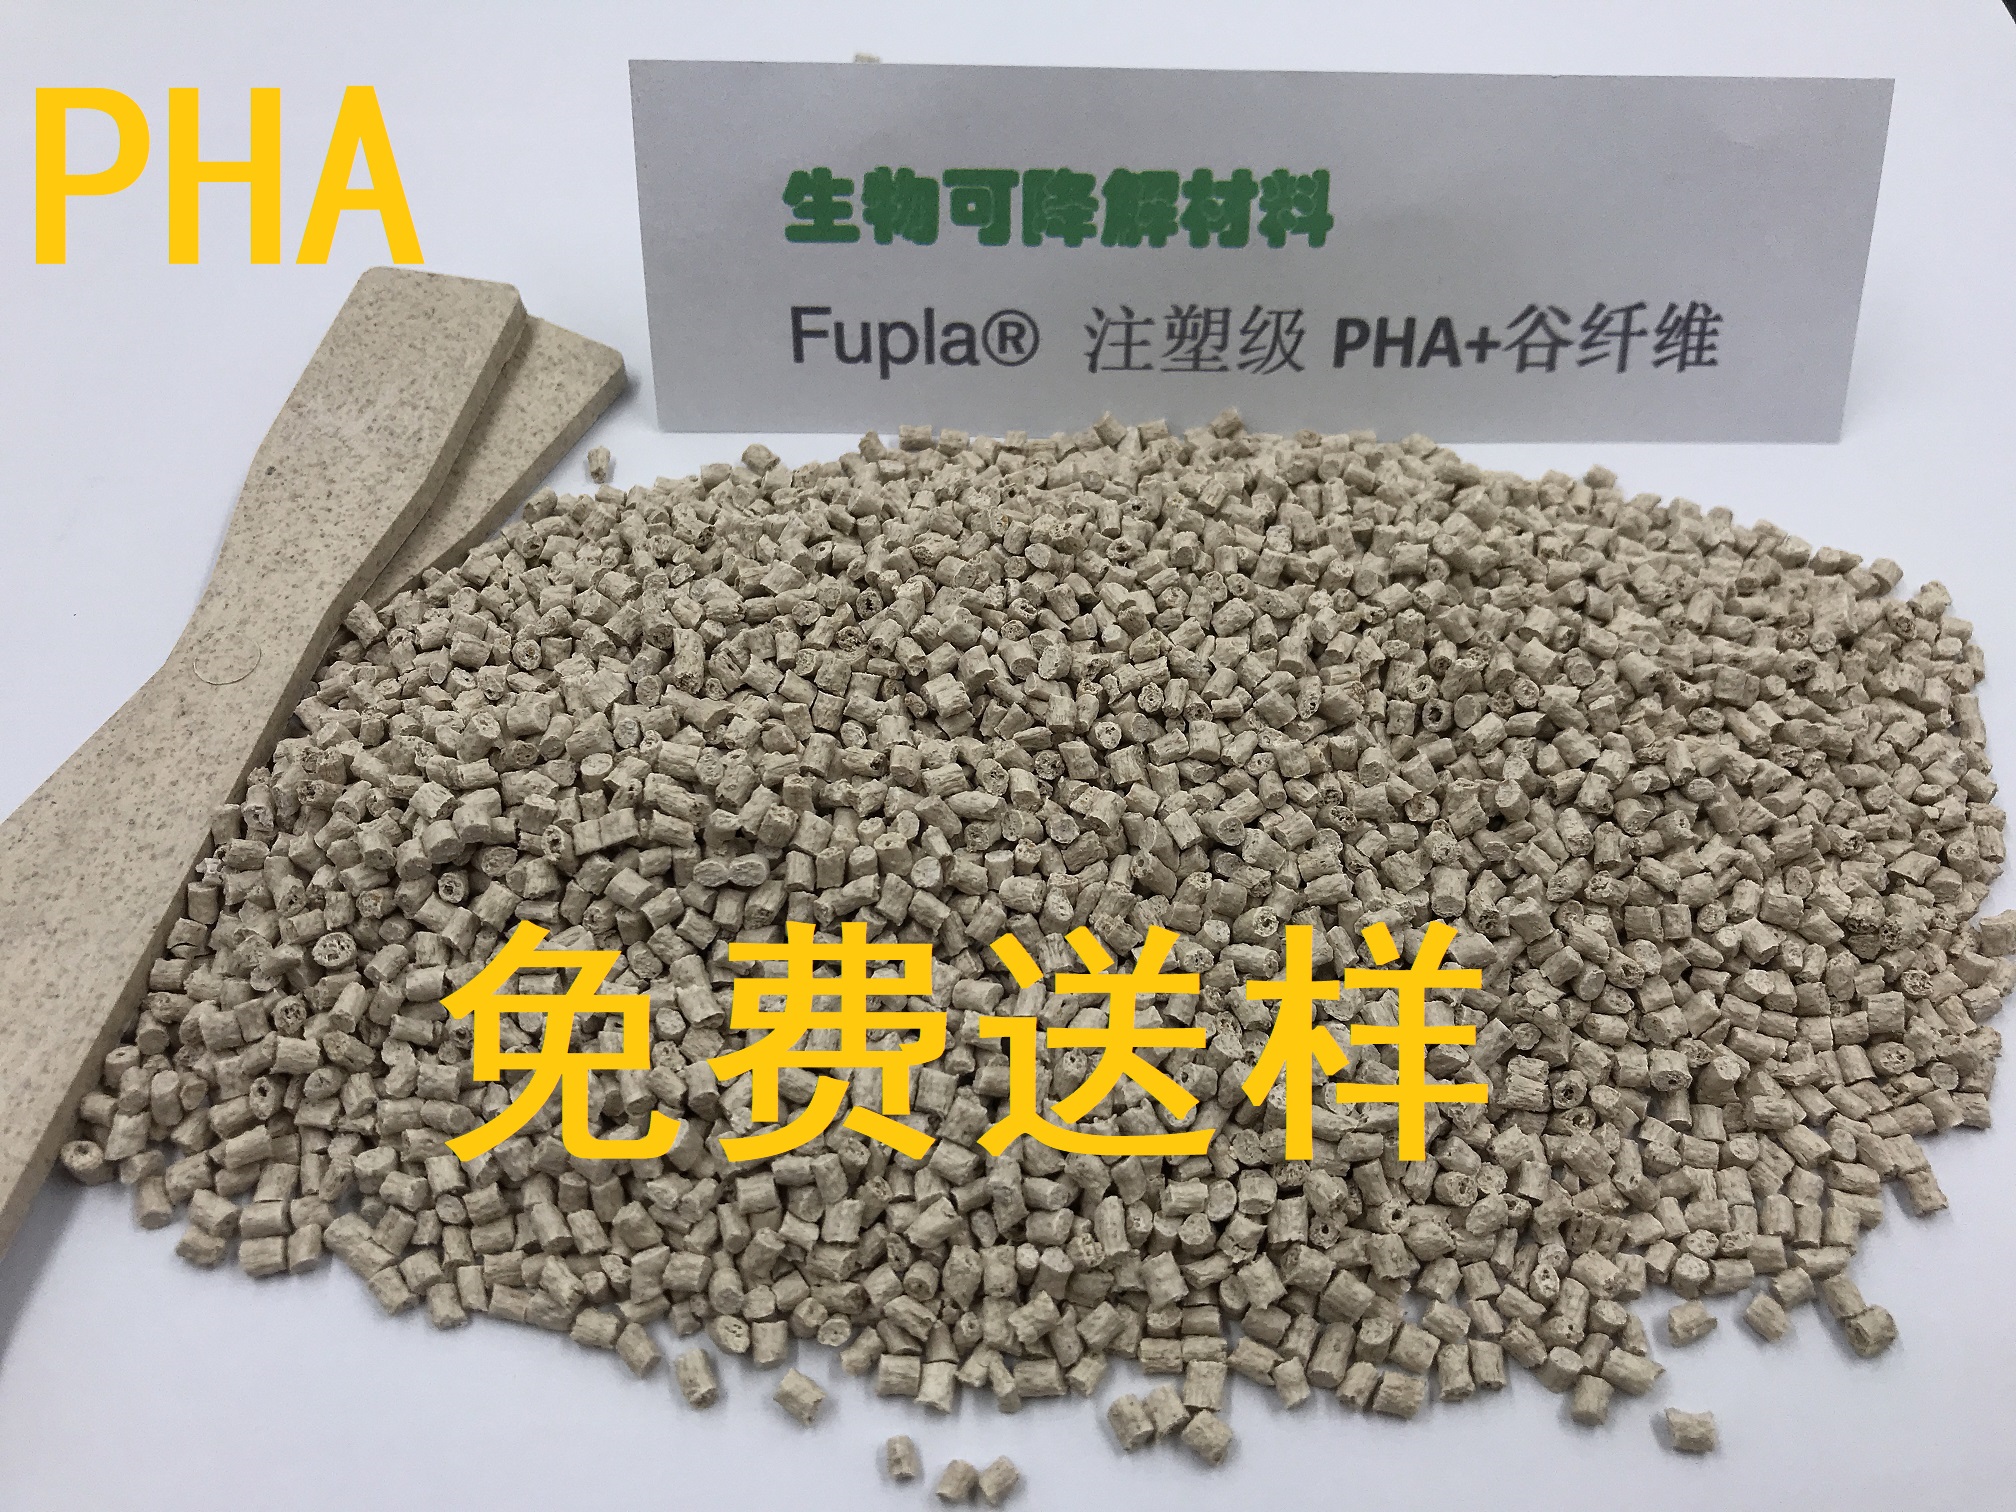 Fupla® K-8200ST PHA+淀粉填充 高强度 高耐热 全降解聚羟基脂肪酸酯PHA